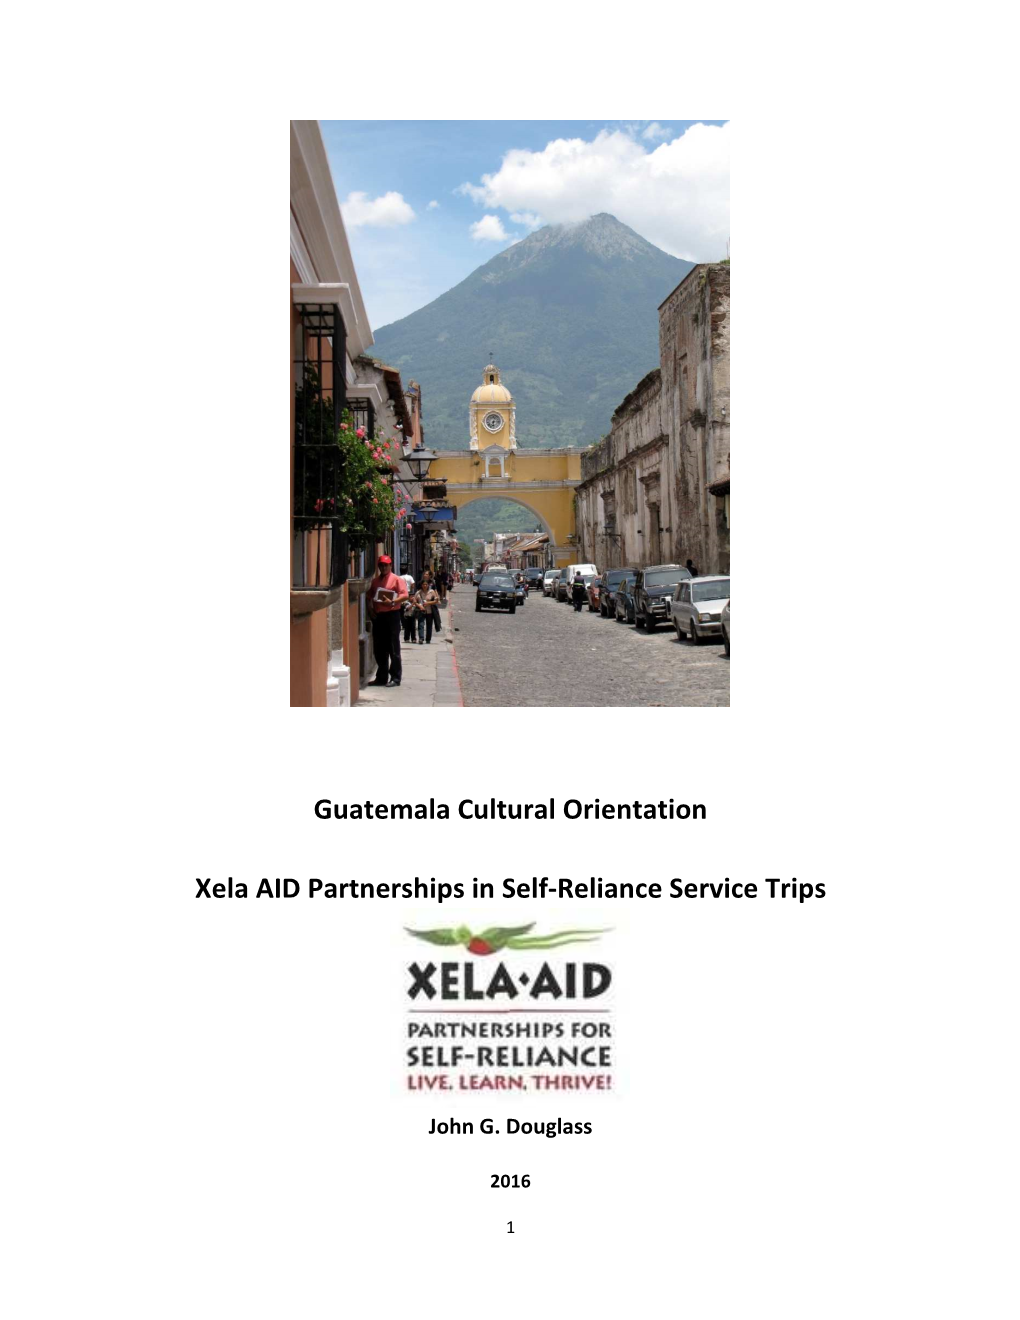 Guatemala Cultural Orientation April 2016.Docx